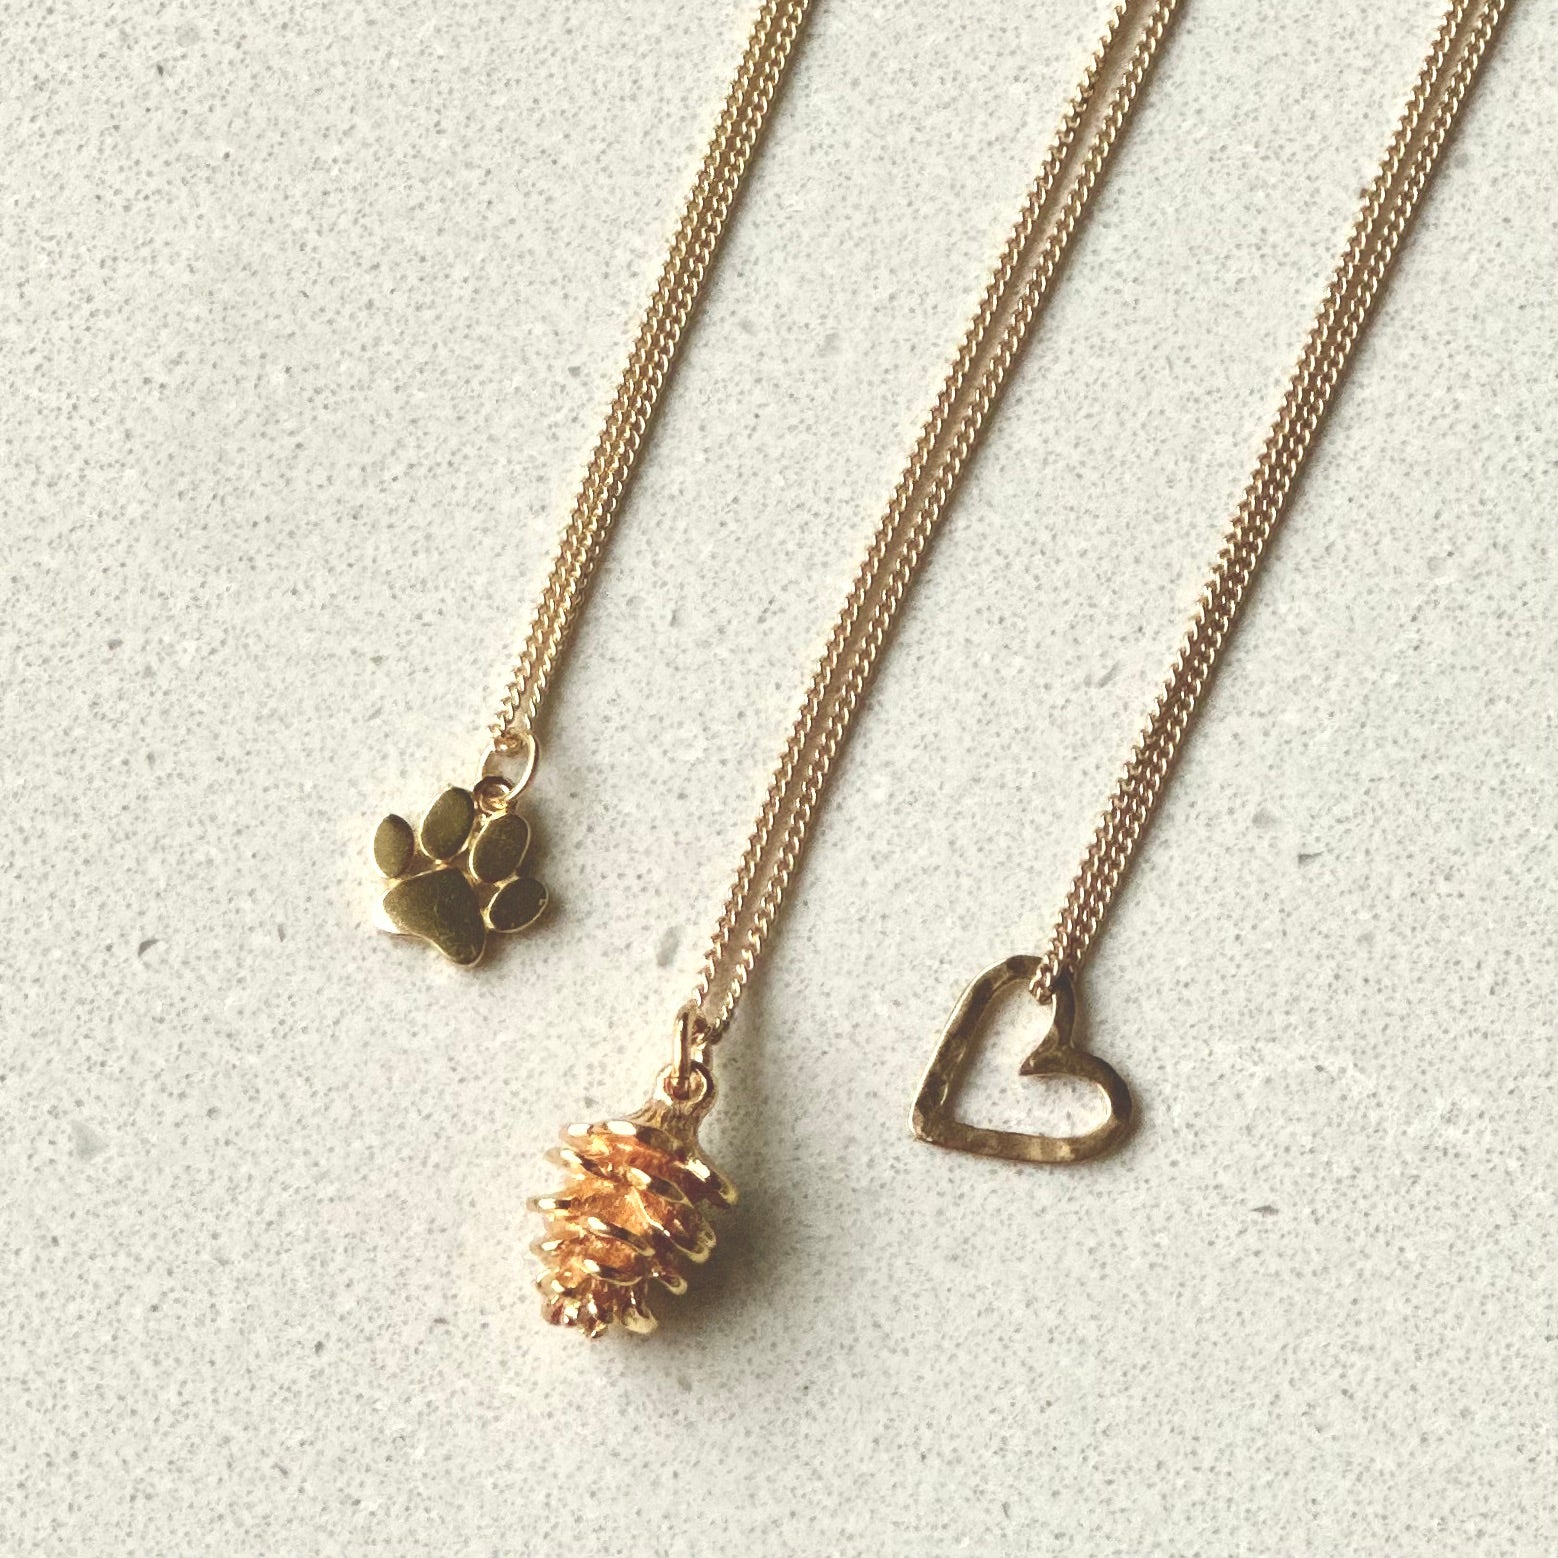 Tiny heart shape pendant